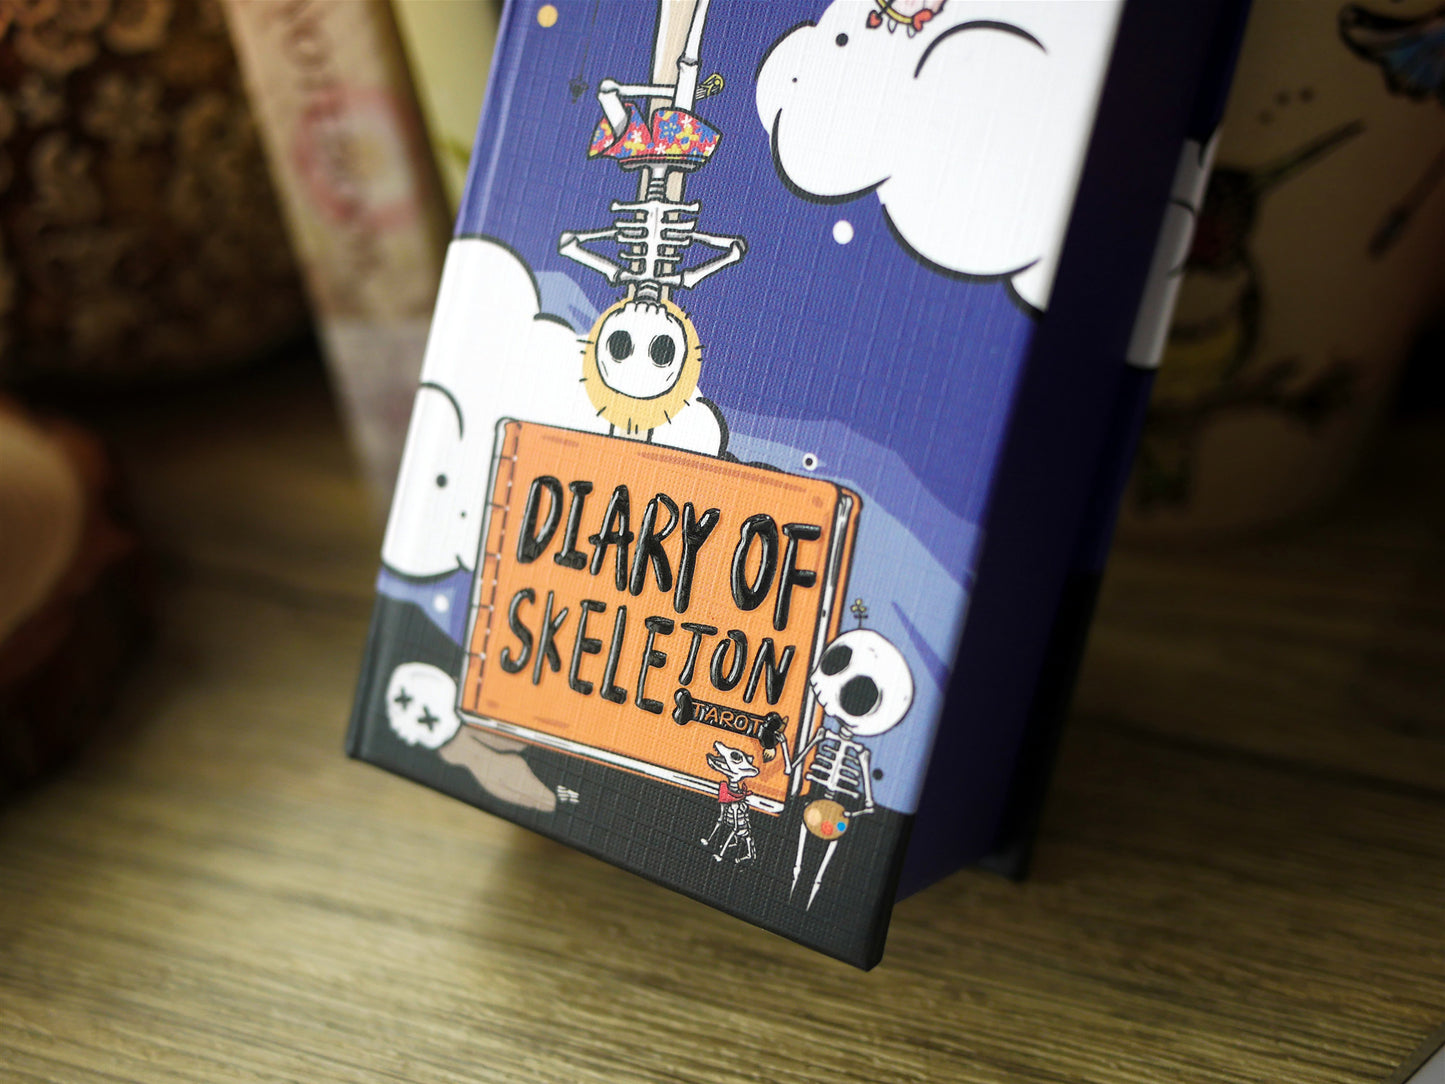 Diary of Skeleton Tarot